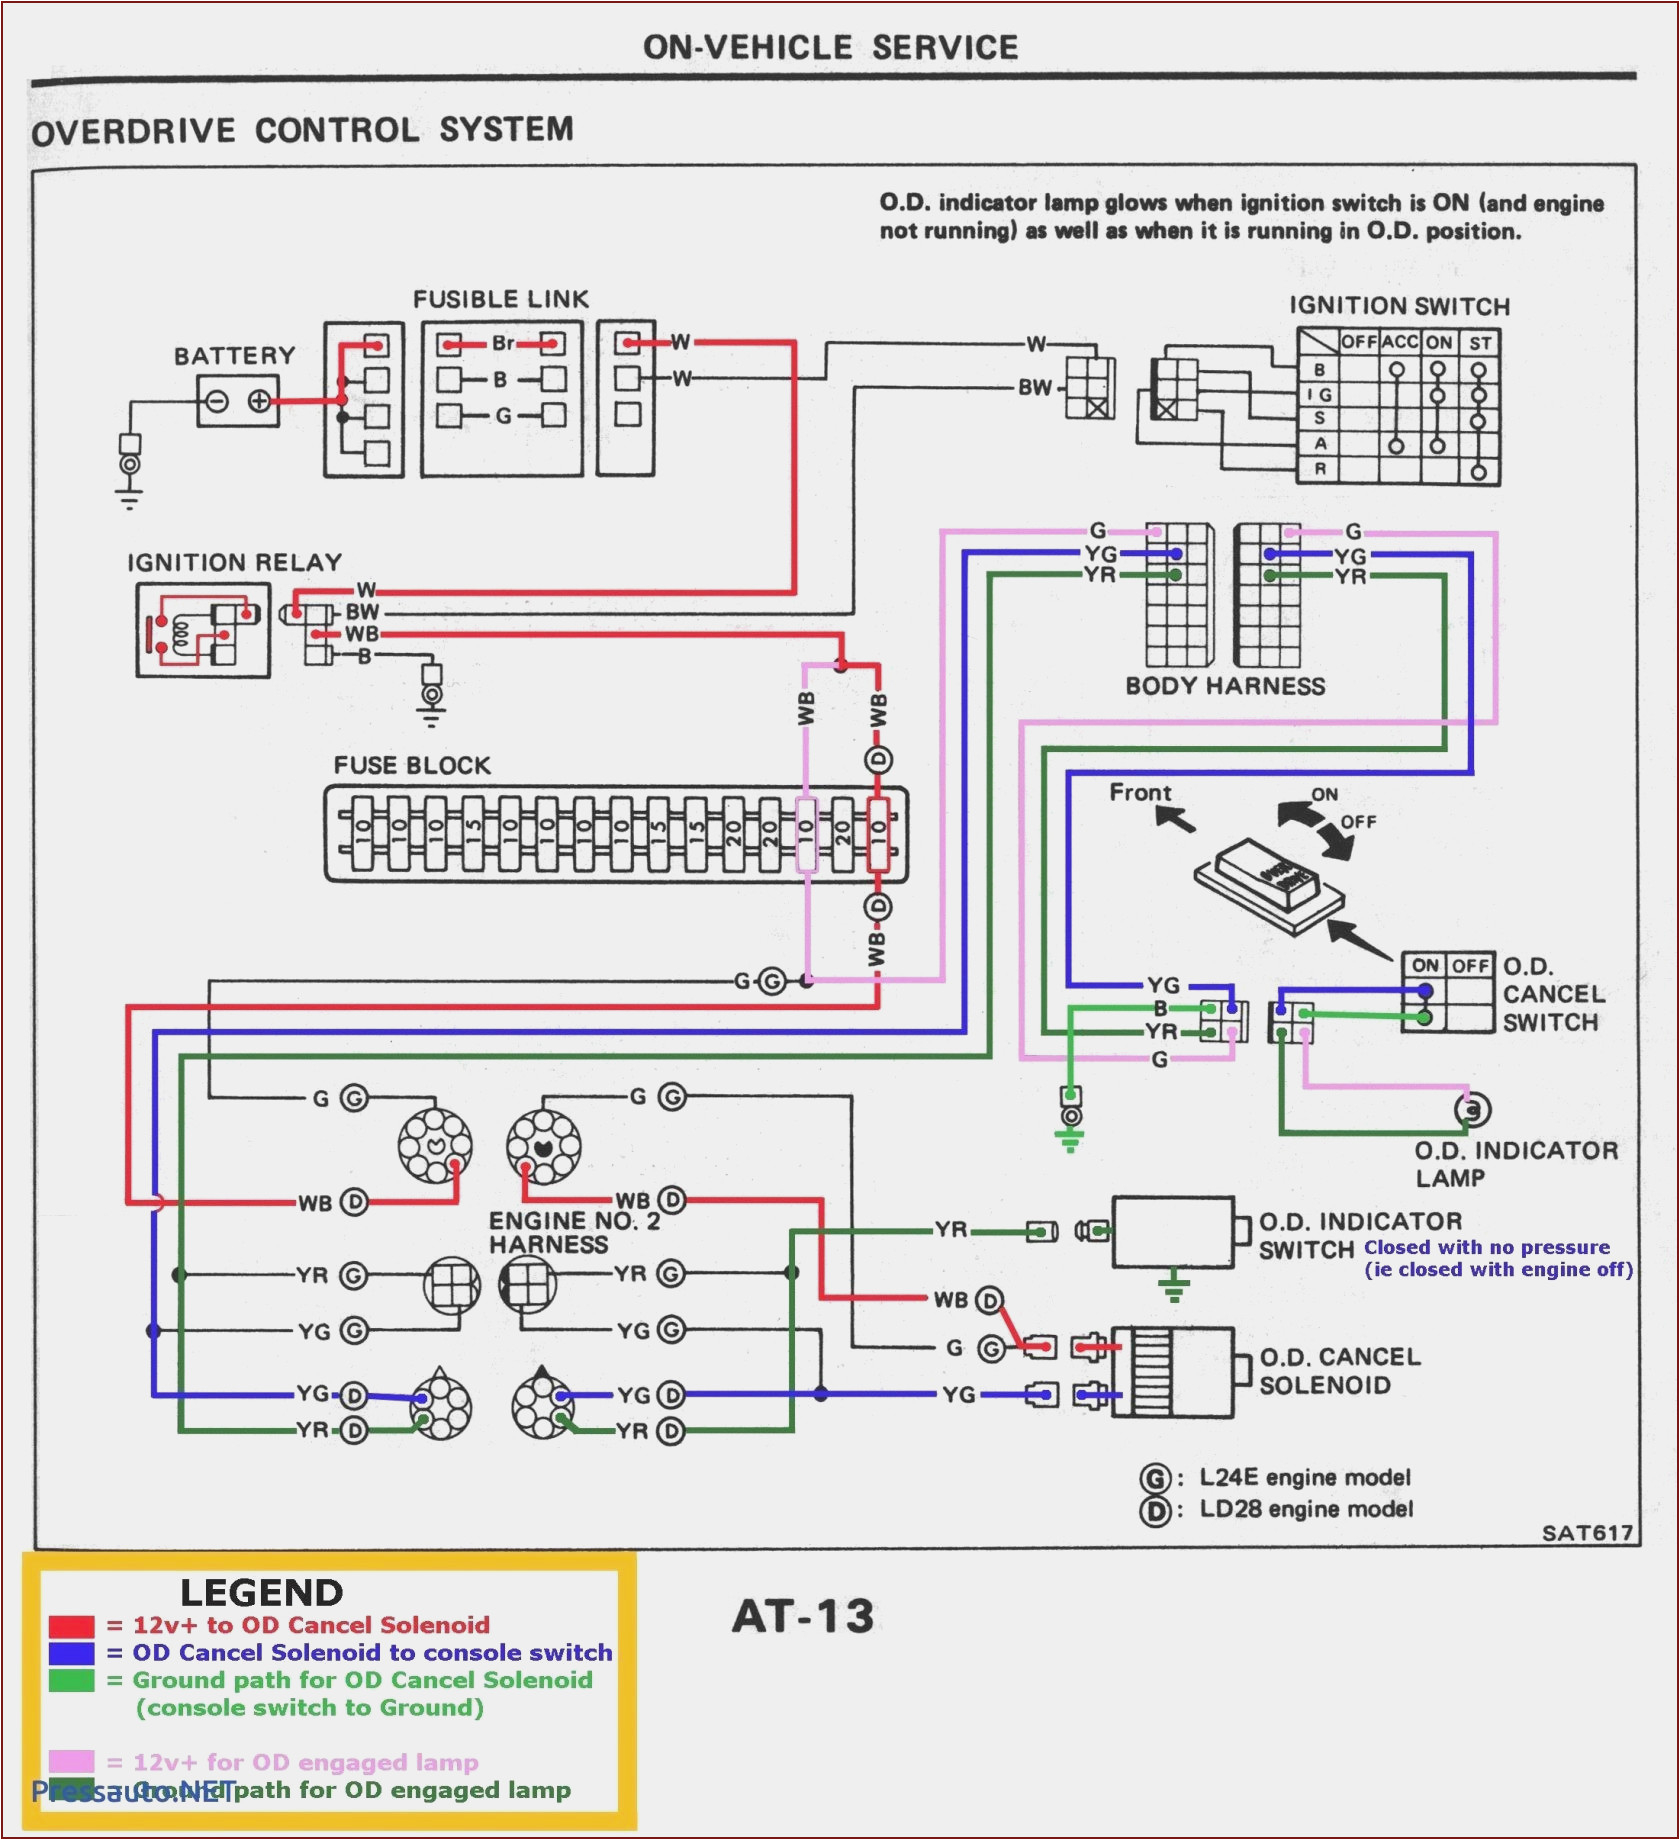 Genteq X13 Wiring Diagram Ecm X13 Motor Wiring Diagram Wiring Diagram